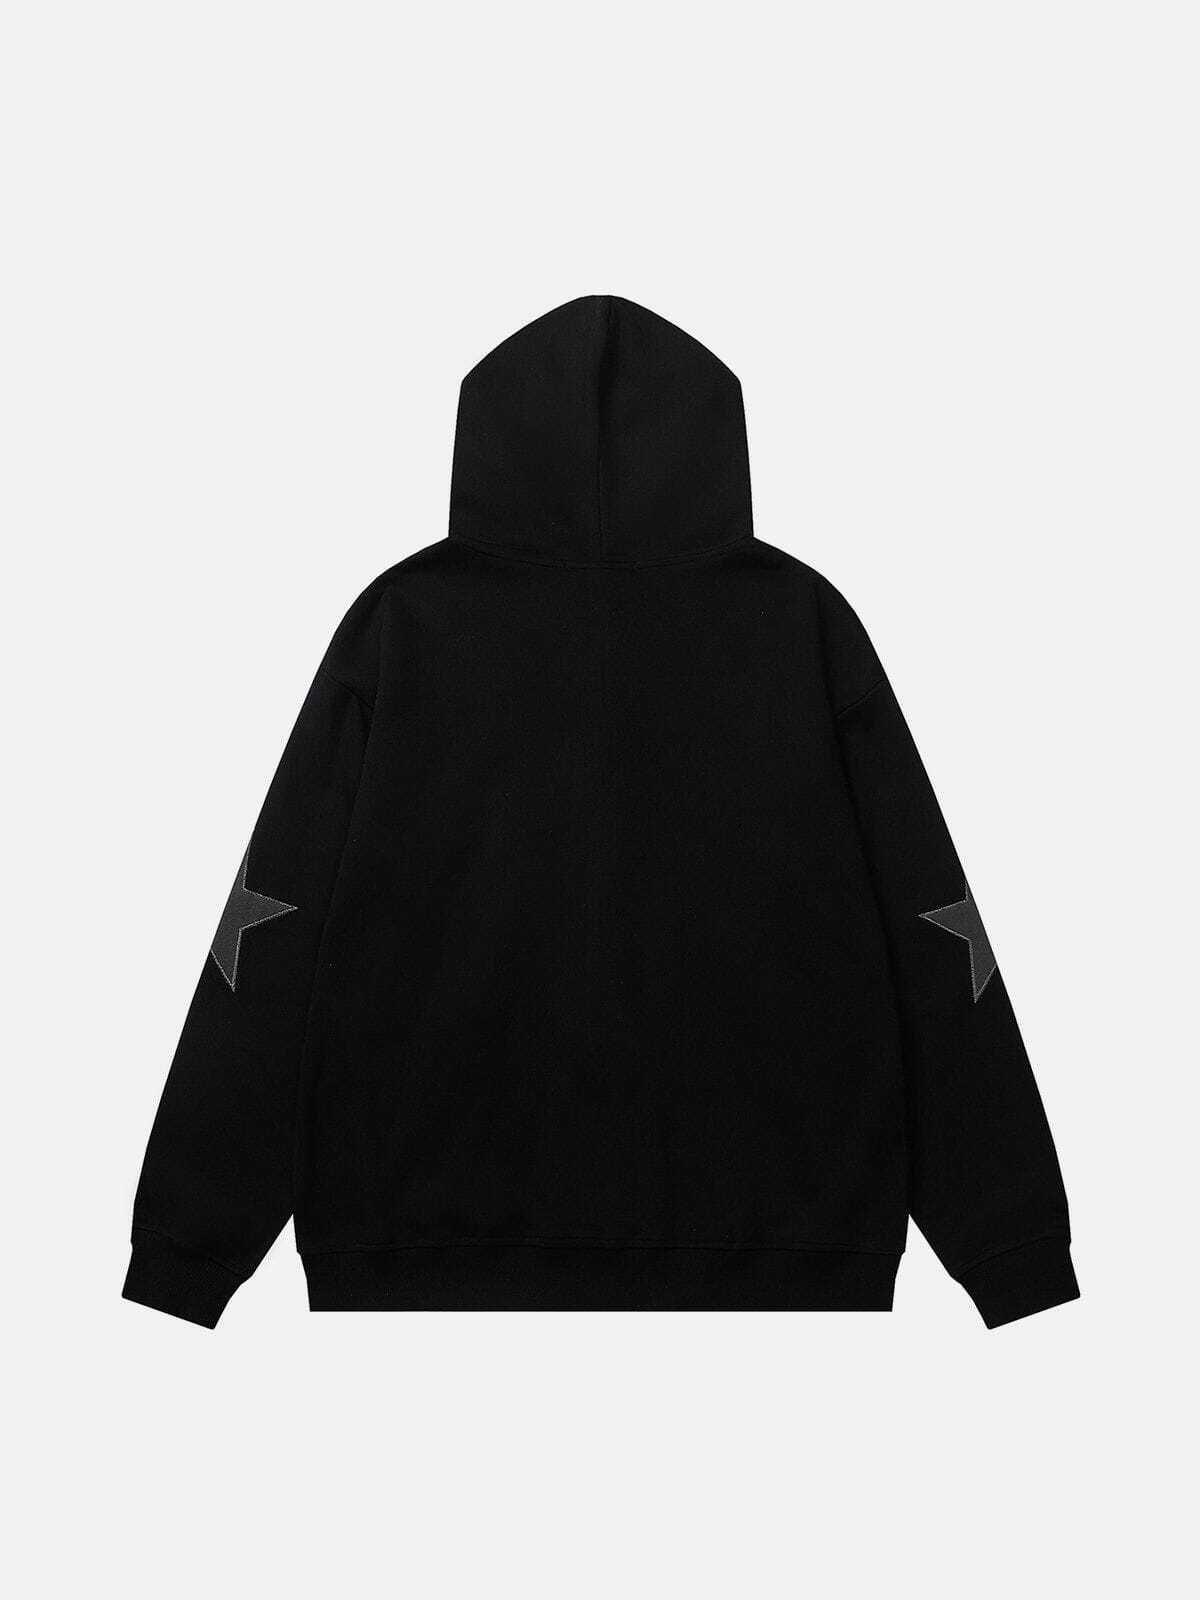 dynamic star graphic hoodie edgy streetwear 5111